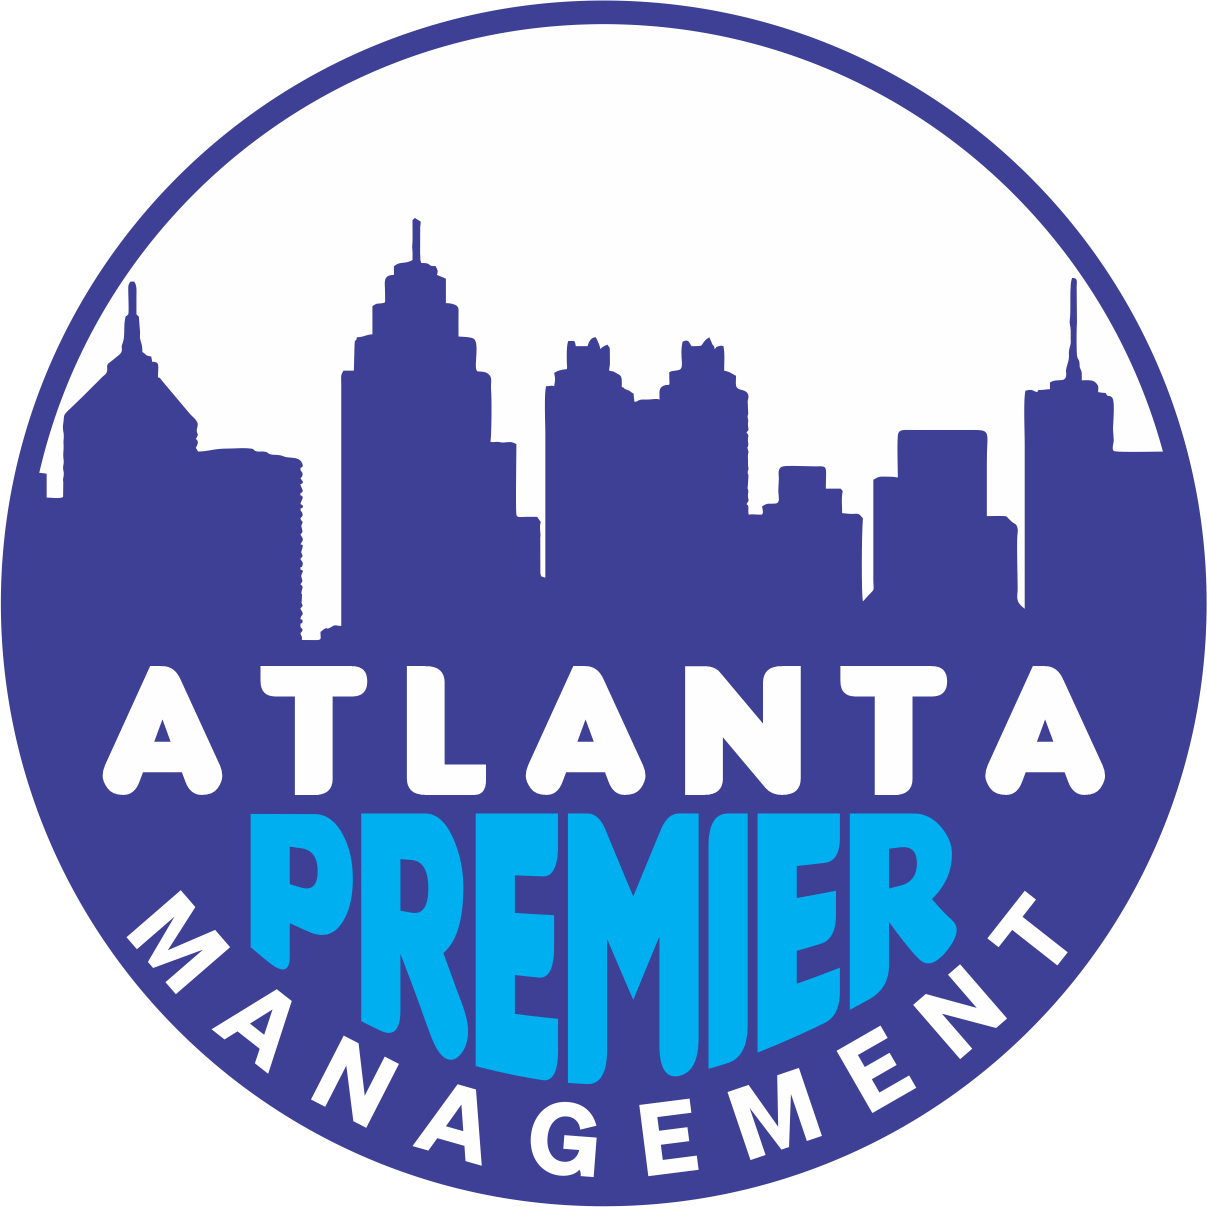 Atlanta Premier Management Company